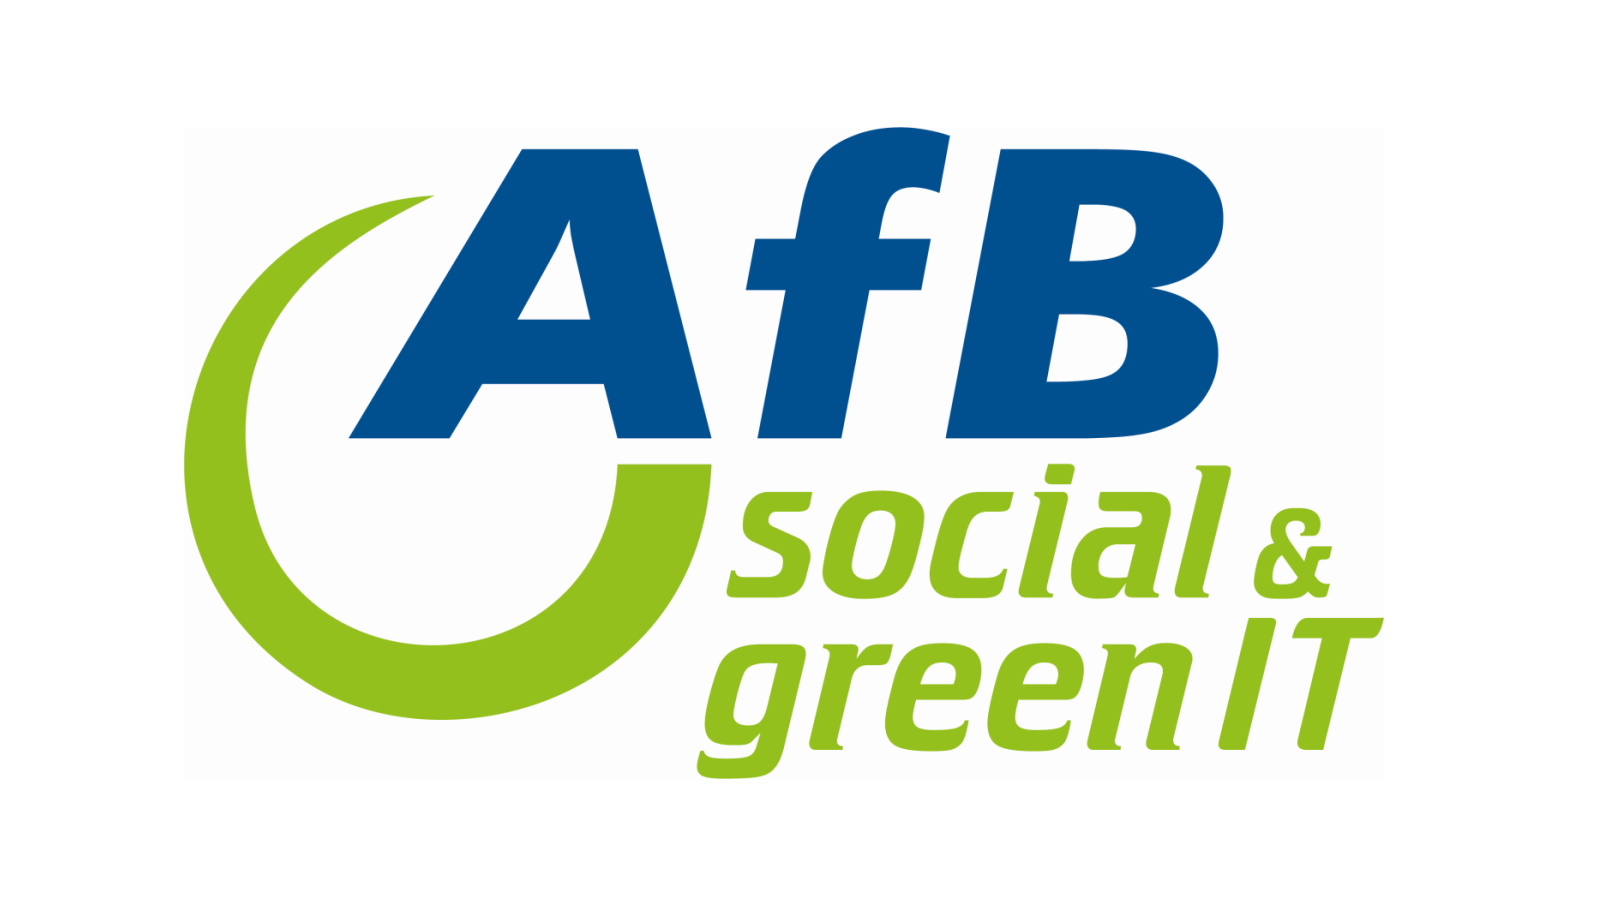 AfB social &greenIT